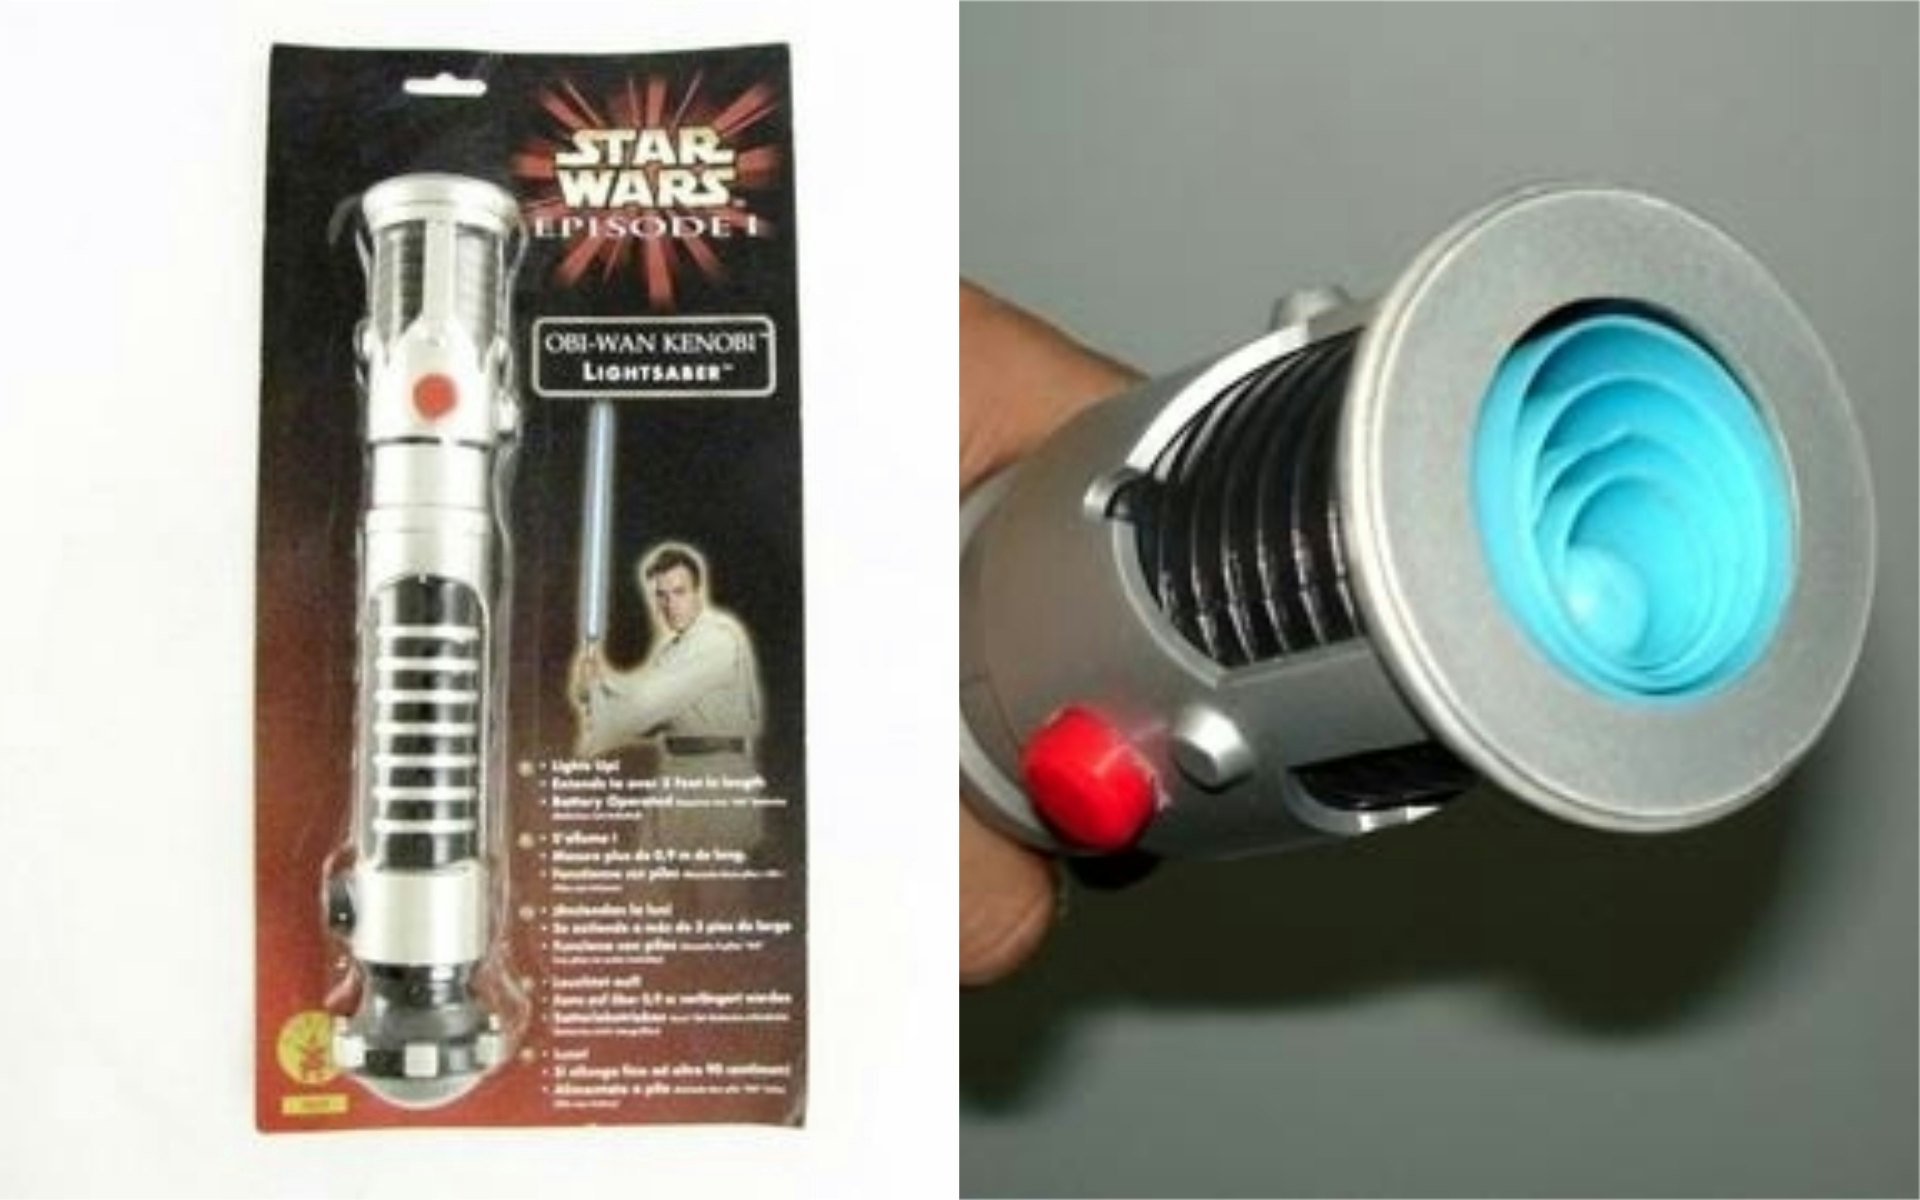 Star Wars' Lightsaber Toys 